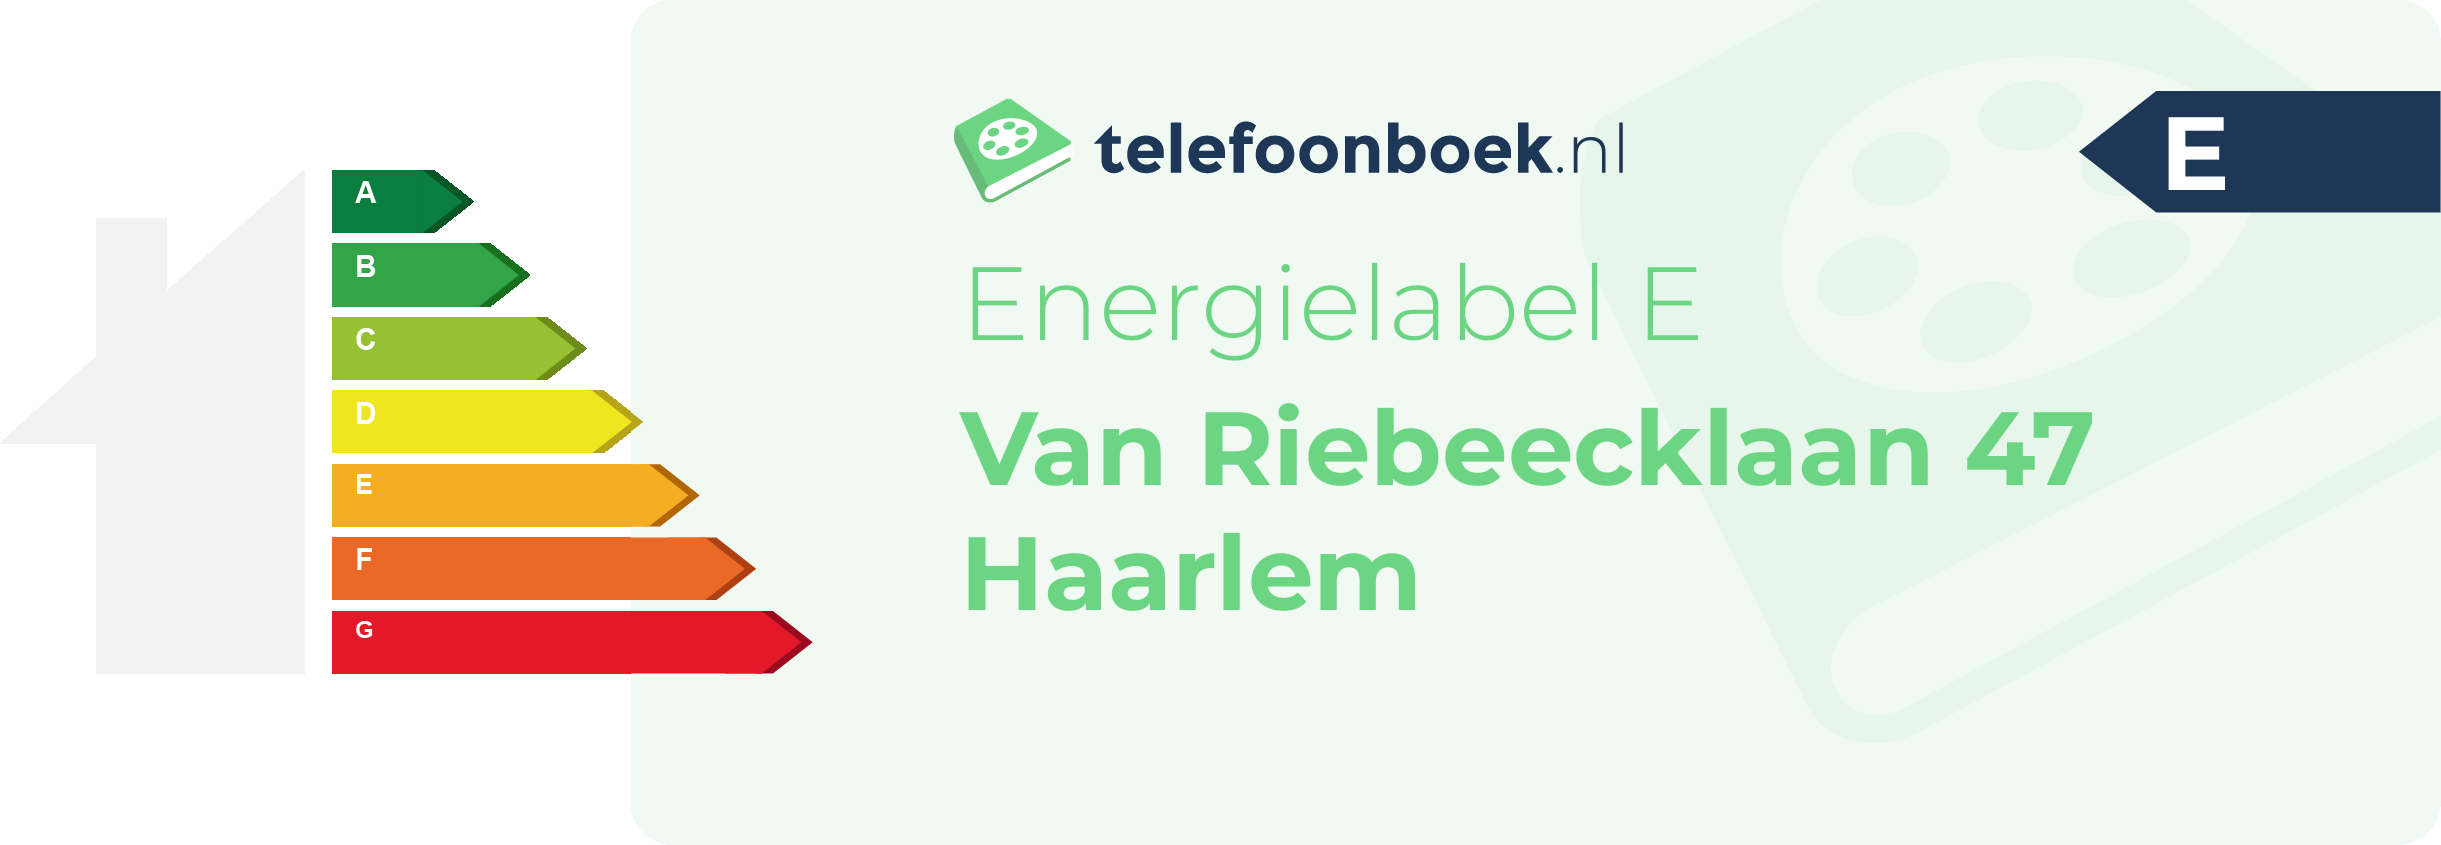 Energielabel Van Riebeecklaan 47 Haarlem